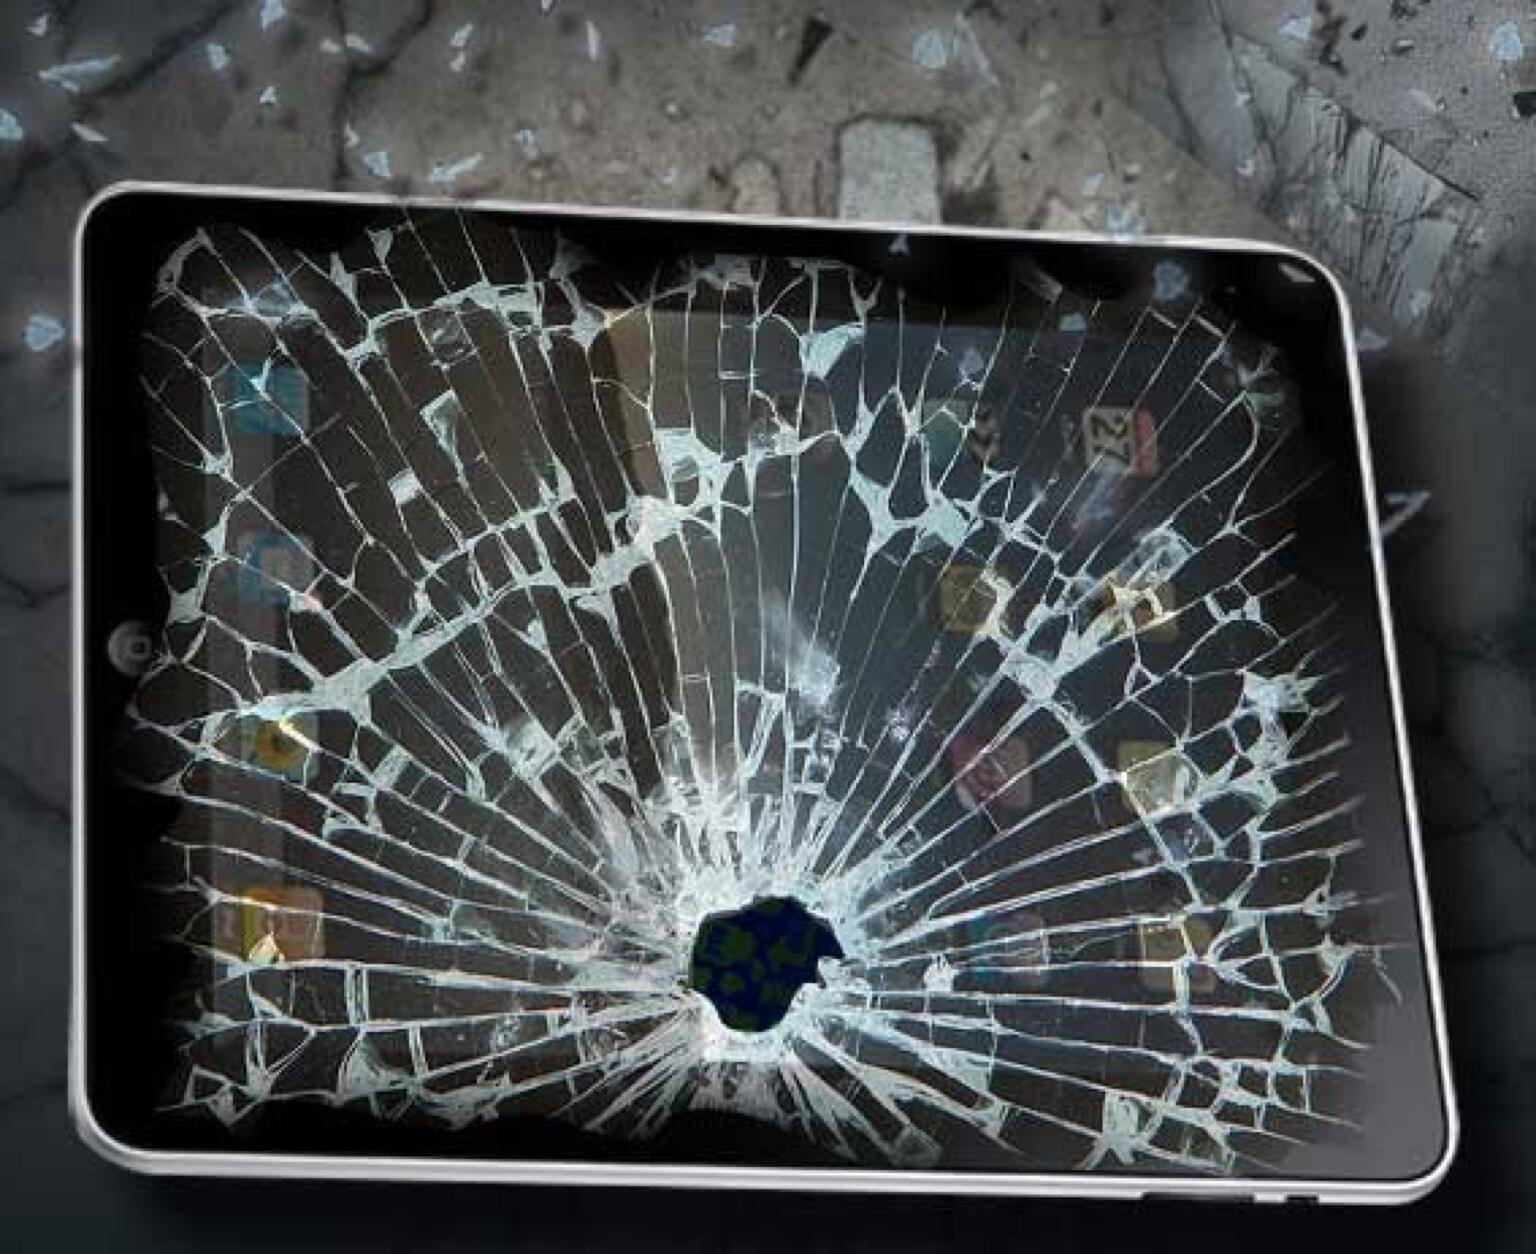 Картинка разбитого телефона на весь экран. Разбитый планшет. Разбитый экран планшета. Разбитое стекло на планшет. Разбитый дисплей планшета.